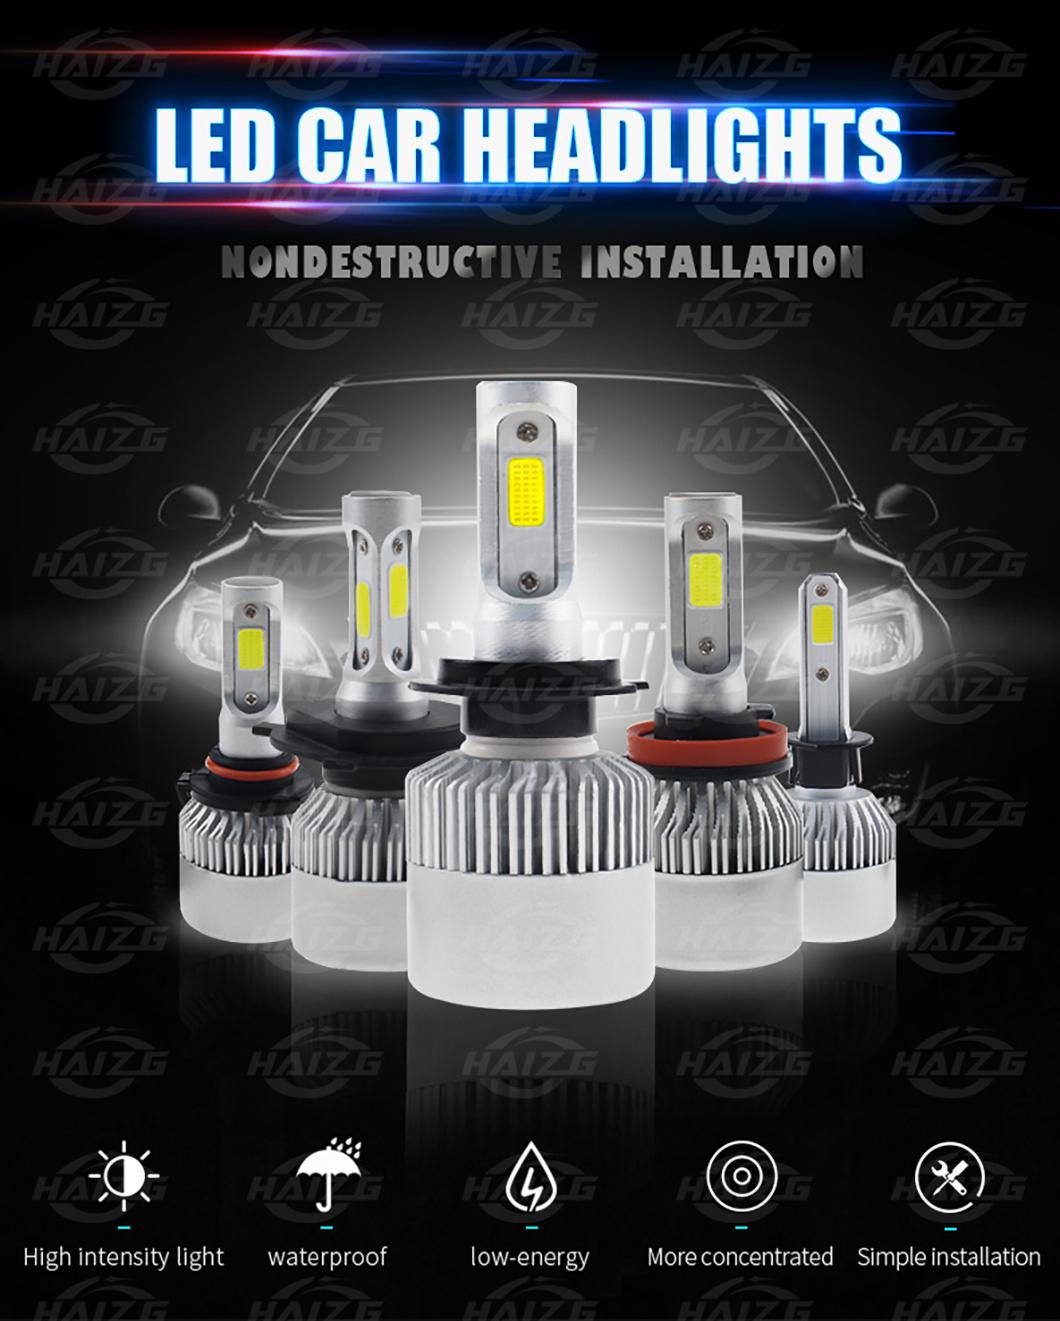 Haizg Auto LED Super Bright 36W 8000lm H1 H4 H7 LED Headlamp Cheap Car LED Headlight